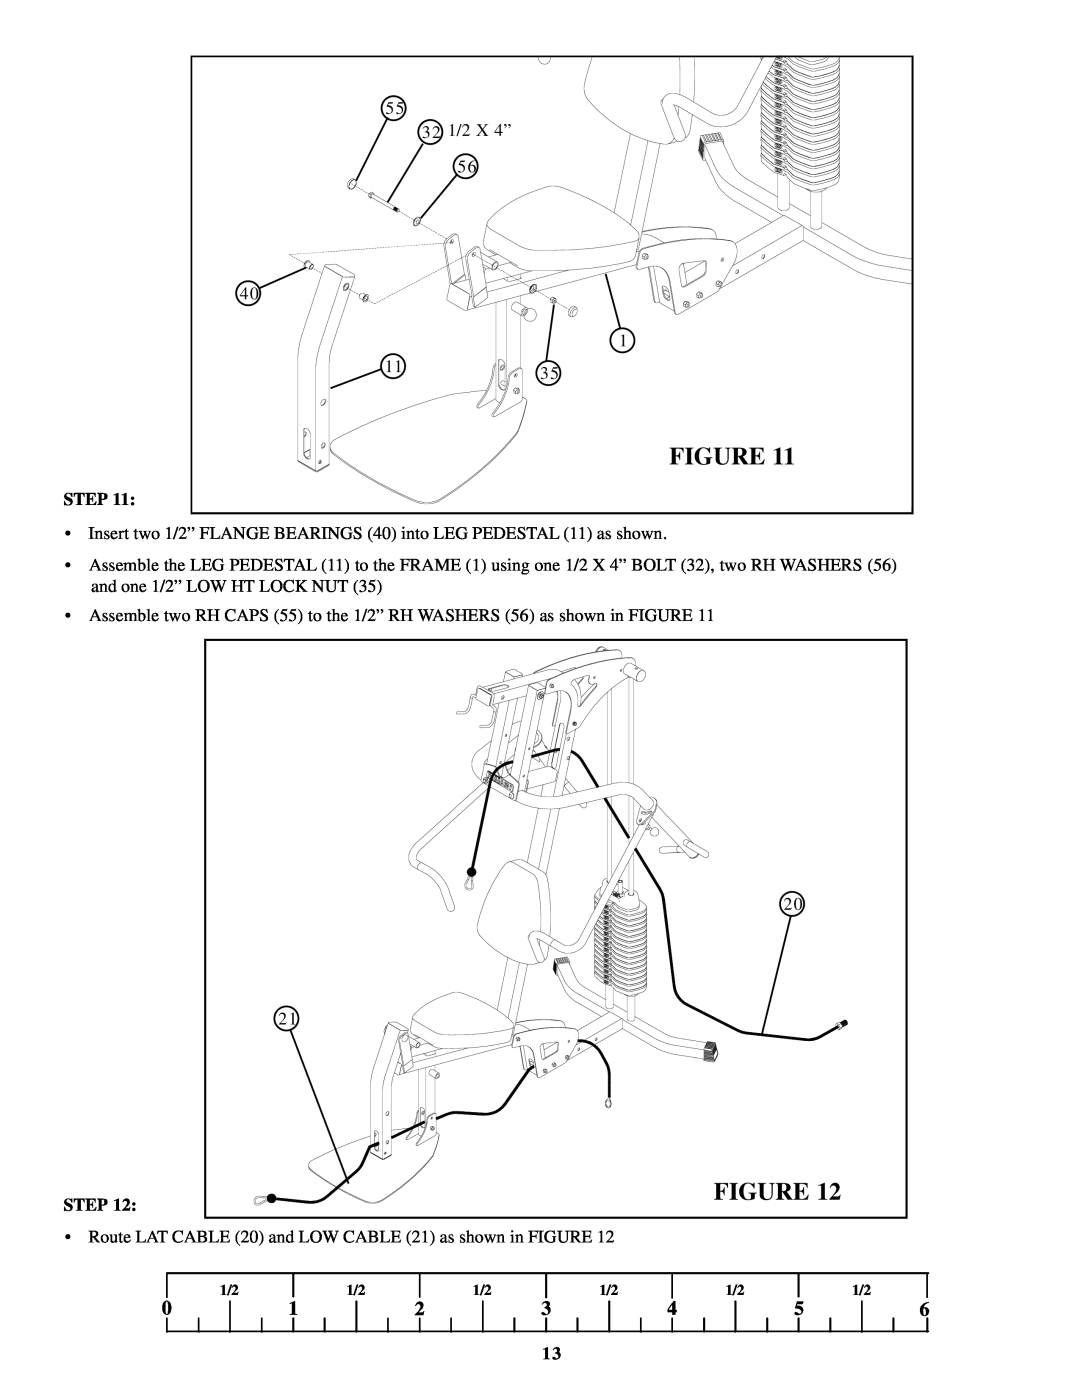 ParaBody 220 manual Step, 32 1/2 X 4”, Insert two 1/2” FLANGE BEARINGS 40 into LEG PEDESTAL 11 as shown 